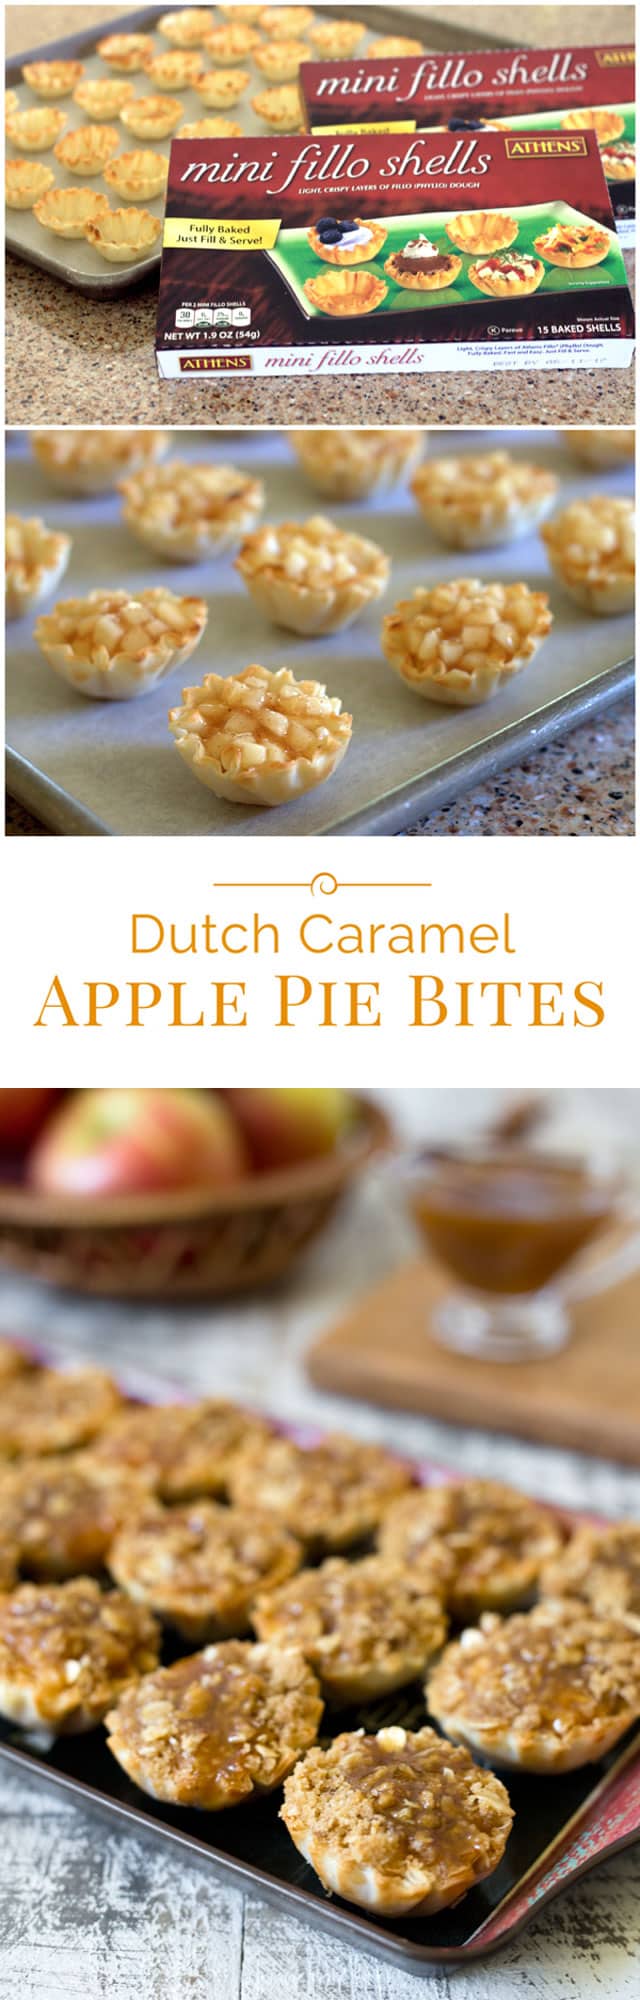 Dutch-Caramel-Apple-Pie-Bites-Collage-2-Barbara-Bakes